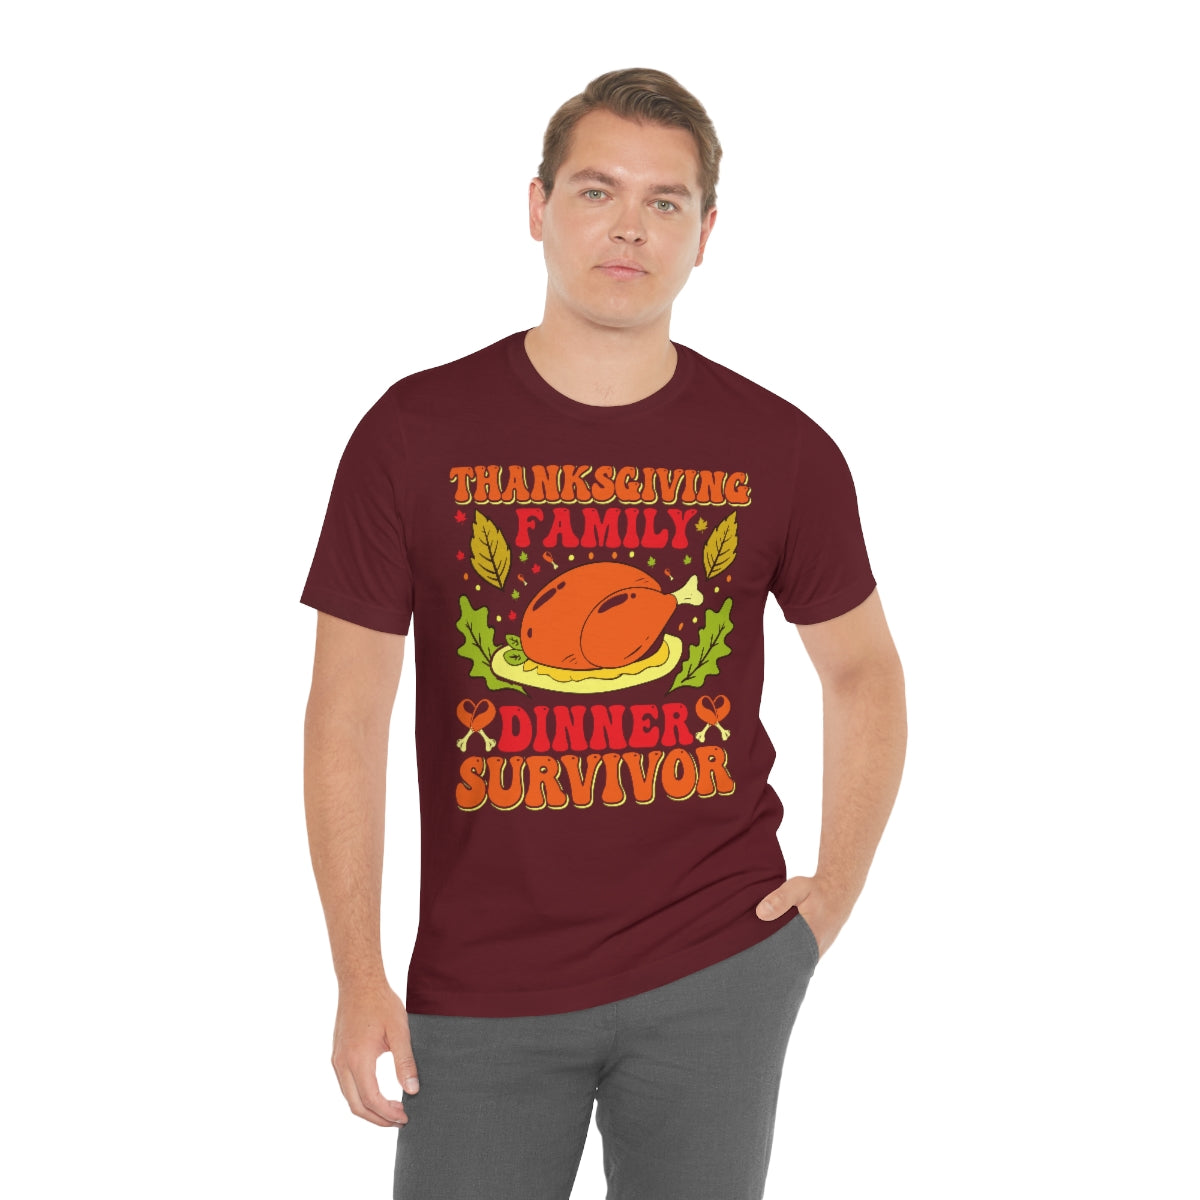 Thanksgiving Dinner Survivor Tshirt, Funny Turkey Family Men Women Adult Aesthetic Graphic Crewneck Tee Shirt Top Starcove Fashion